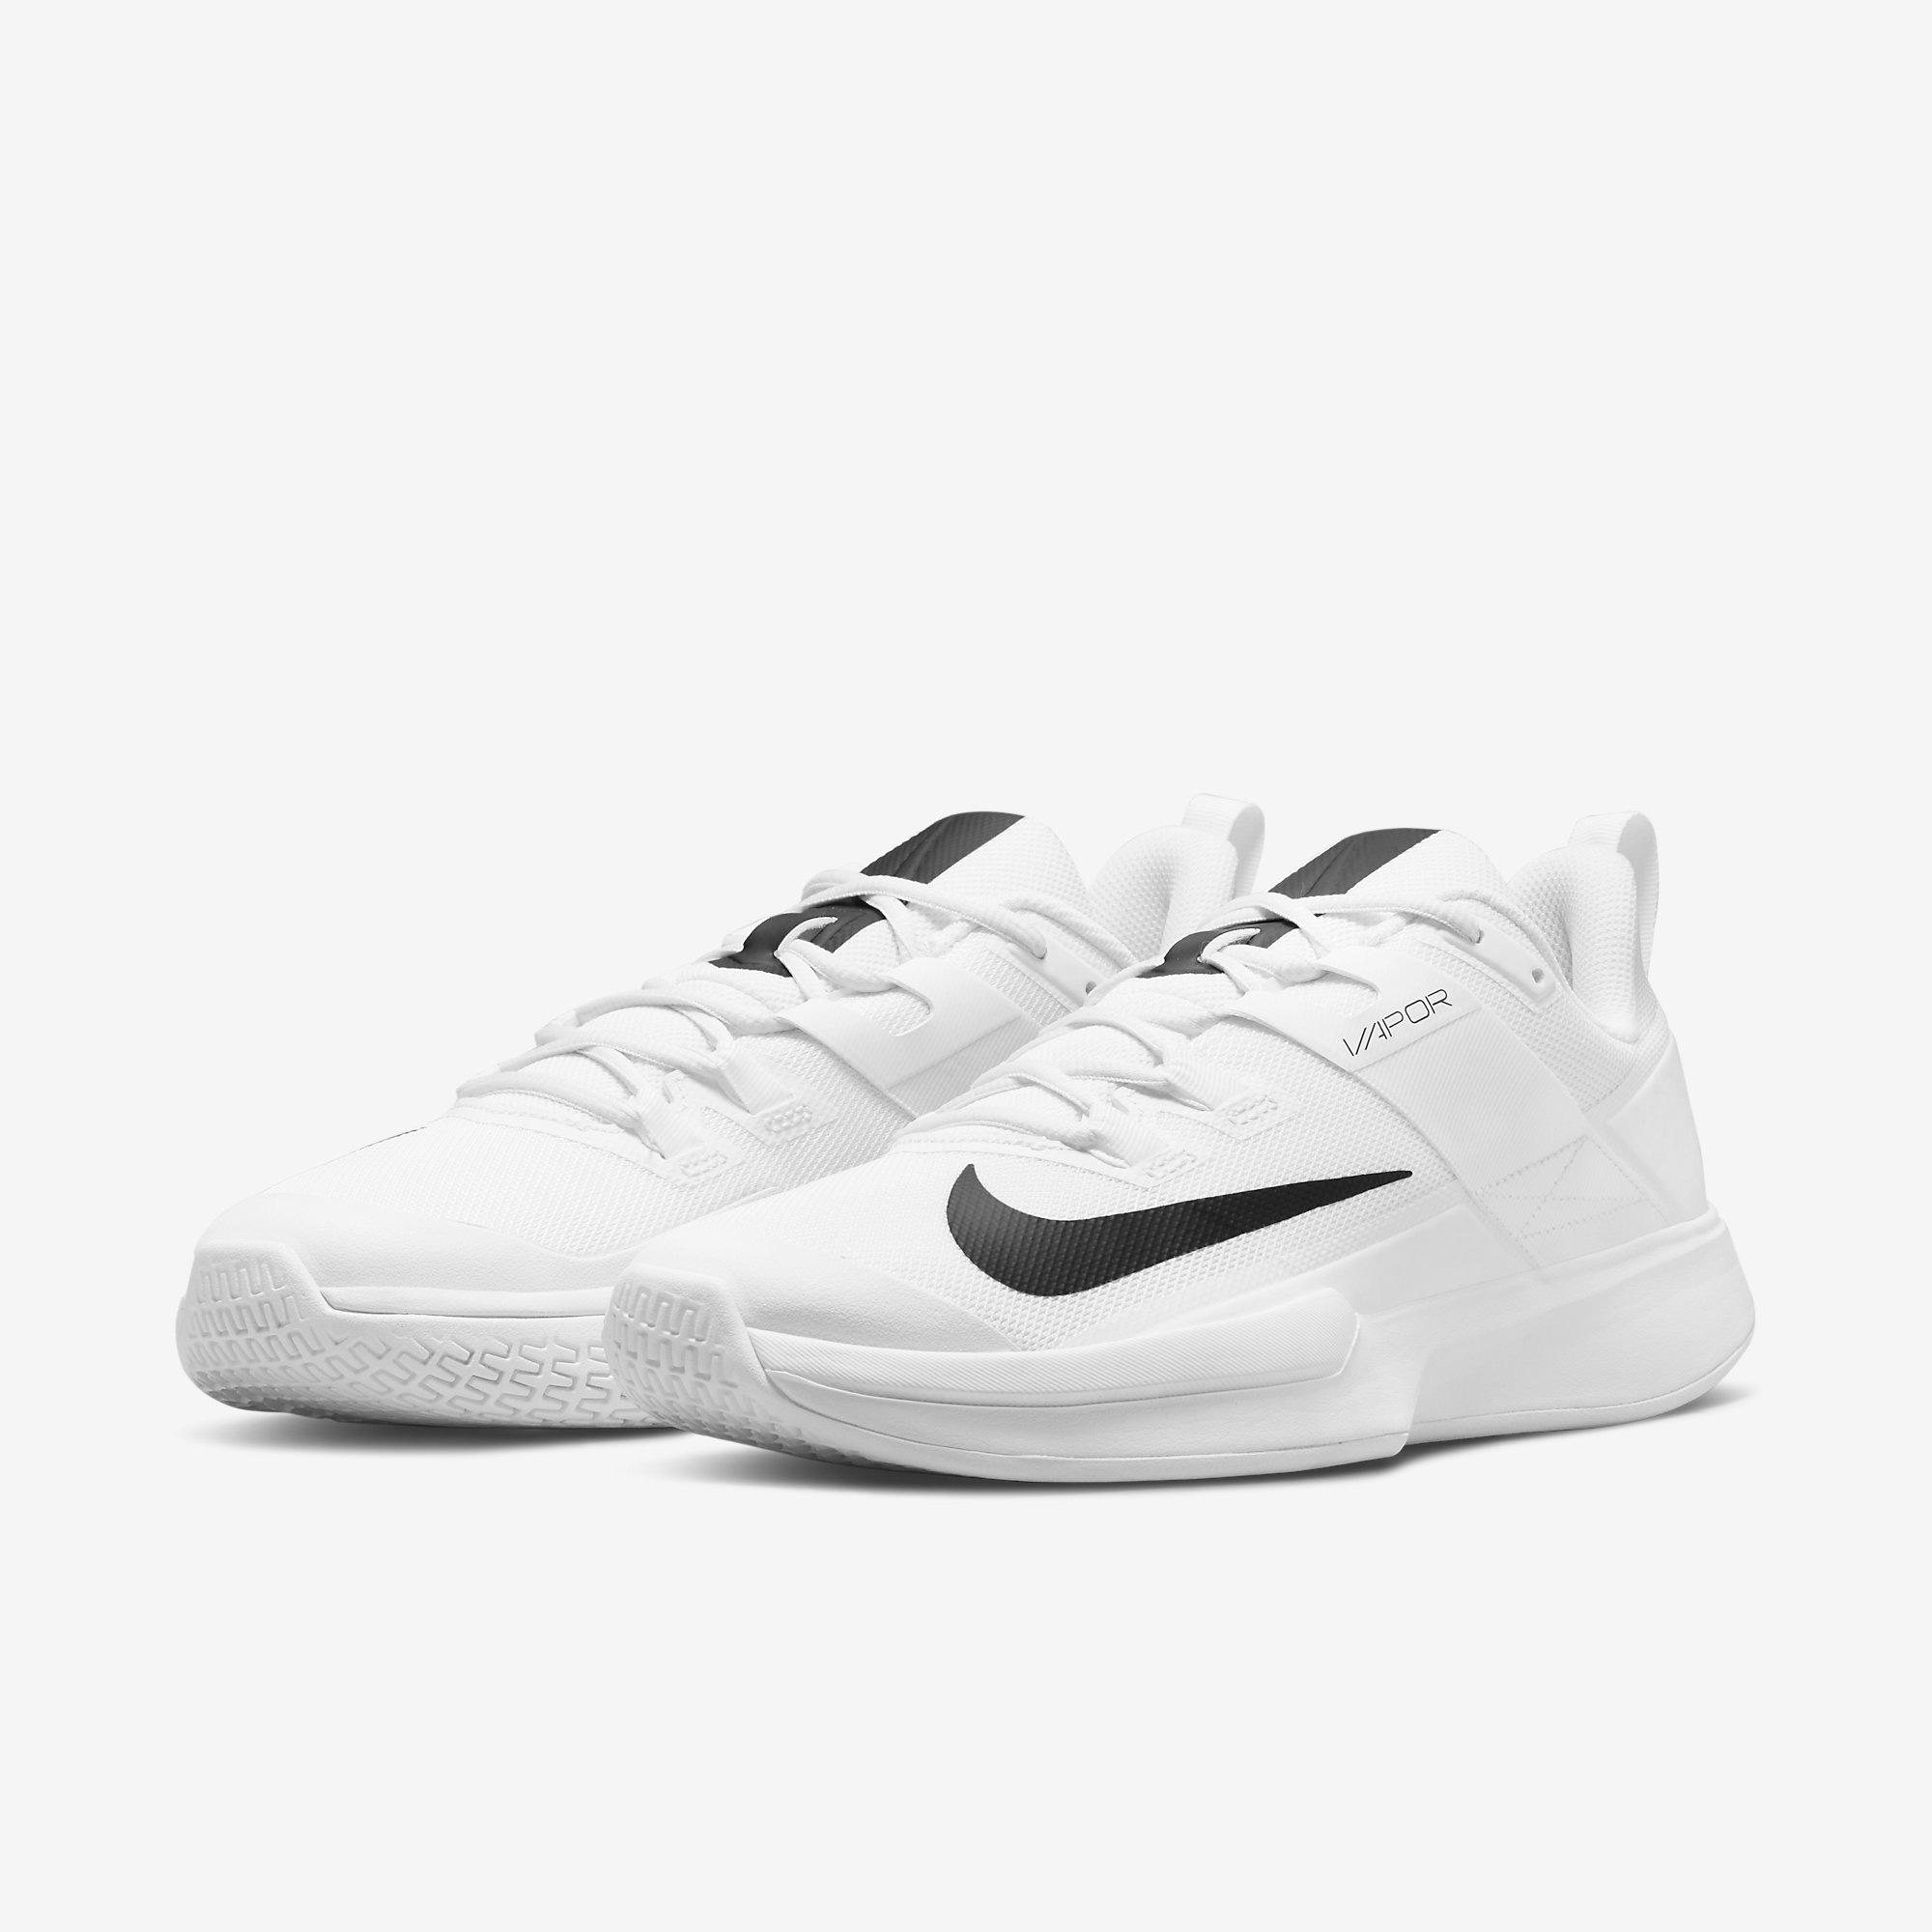 Nike Mens Vapor Lite Tennis Shoes - White - Tennisnuts.com